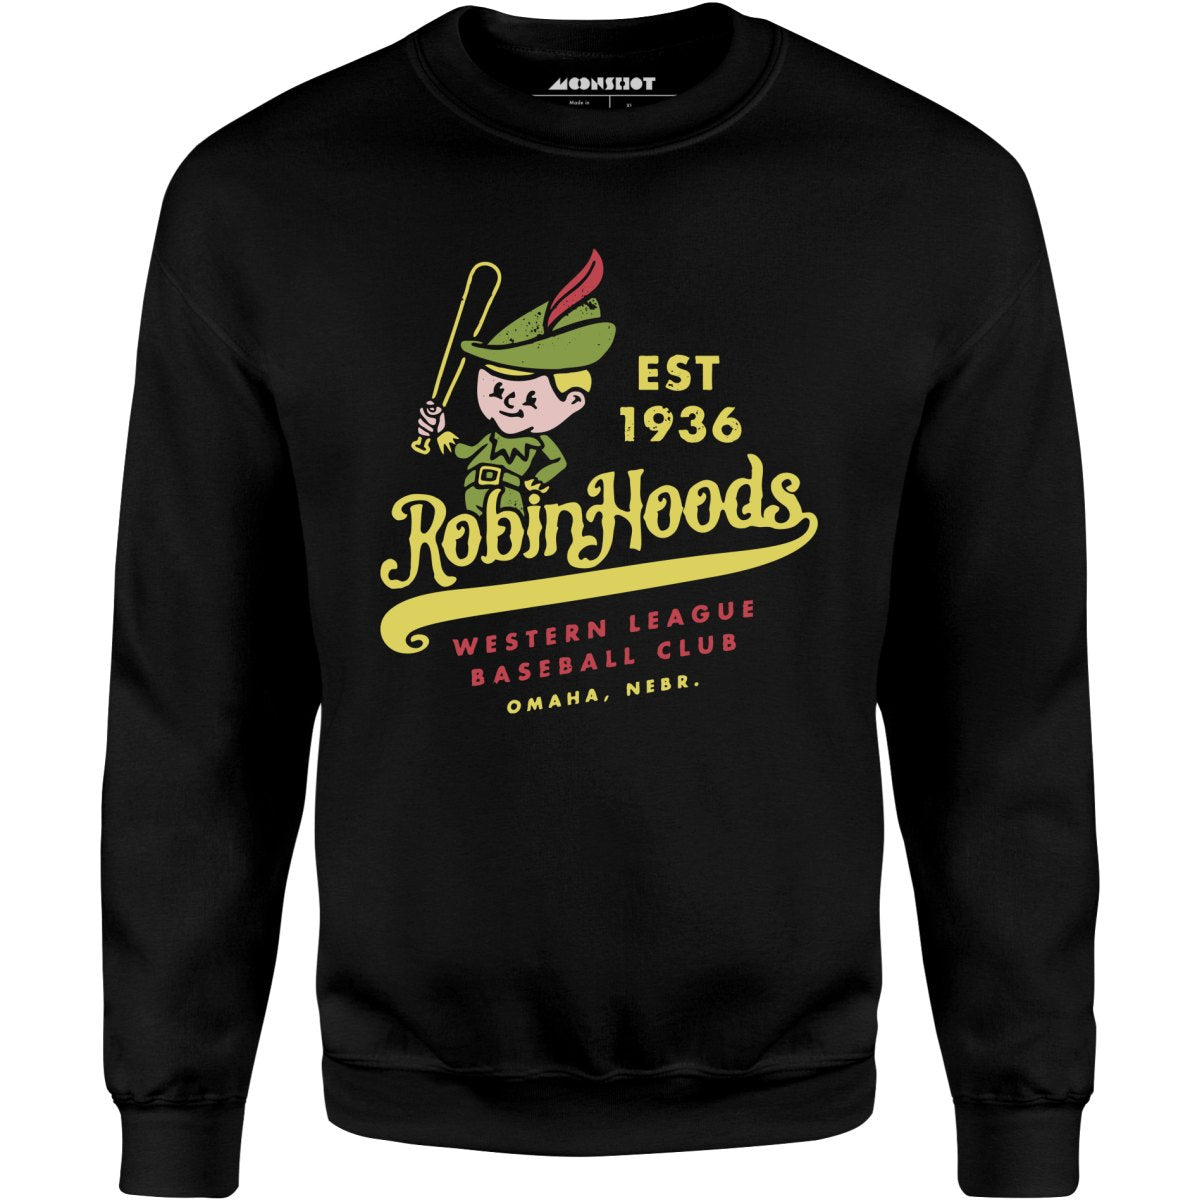 Omaha Robin Hoods - Nebraska - Vintage Defunct Baseball Teams - Unisex Sweatshirt